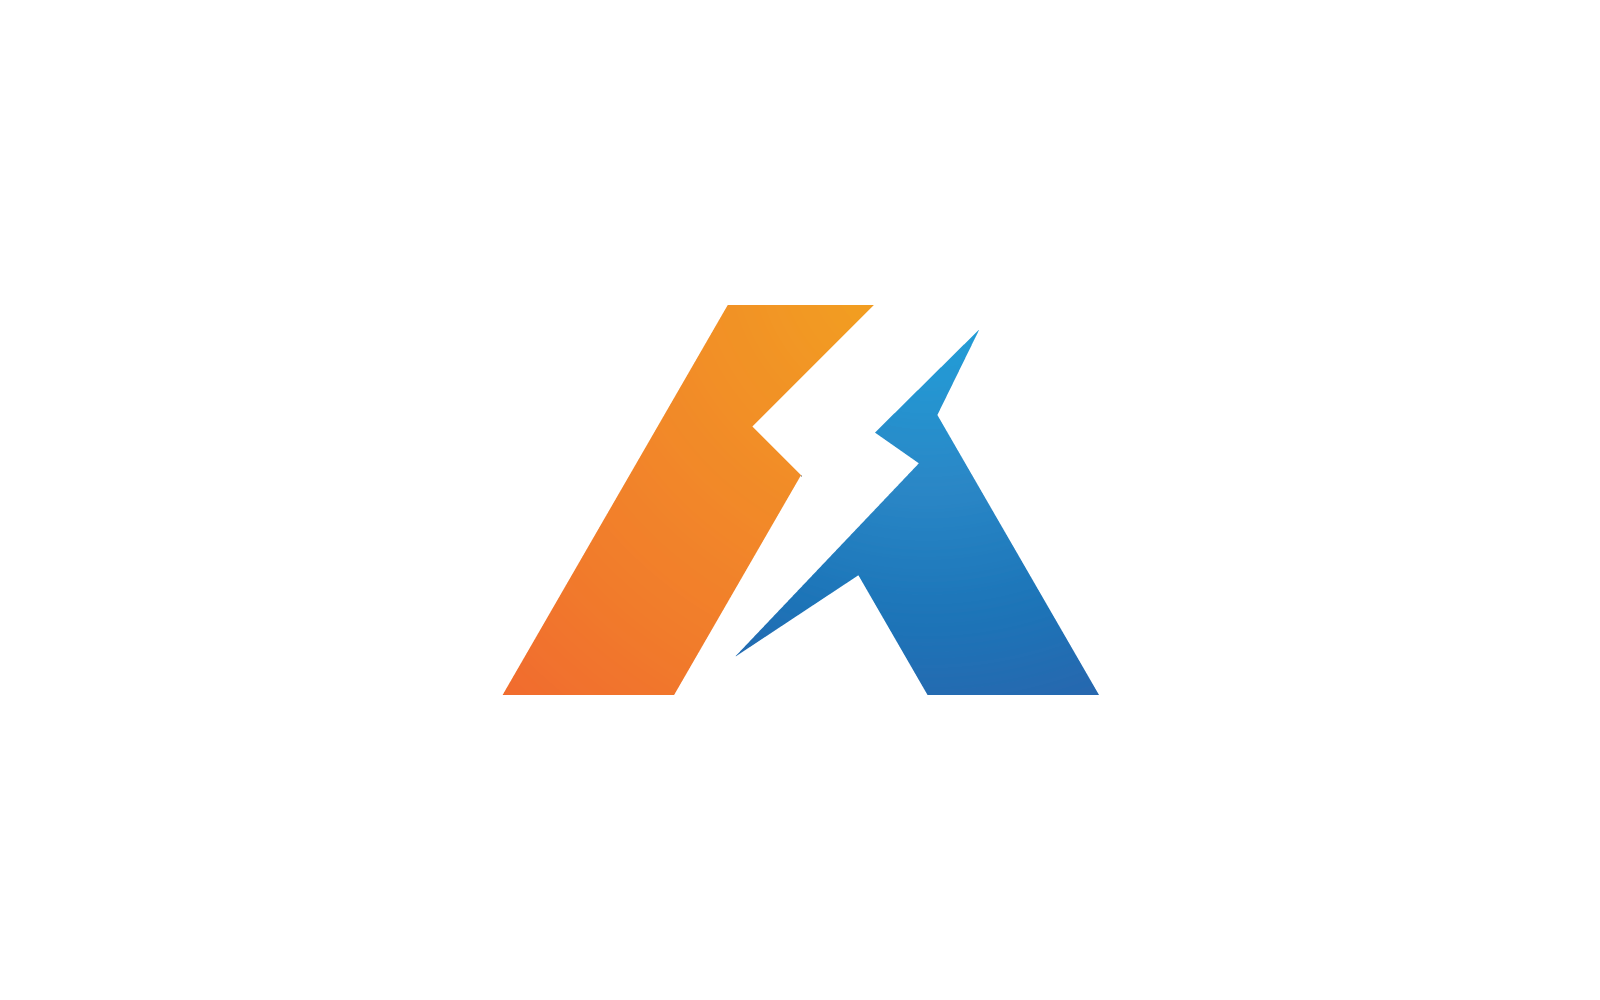 K initial letter logo illustration vector flat design